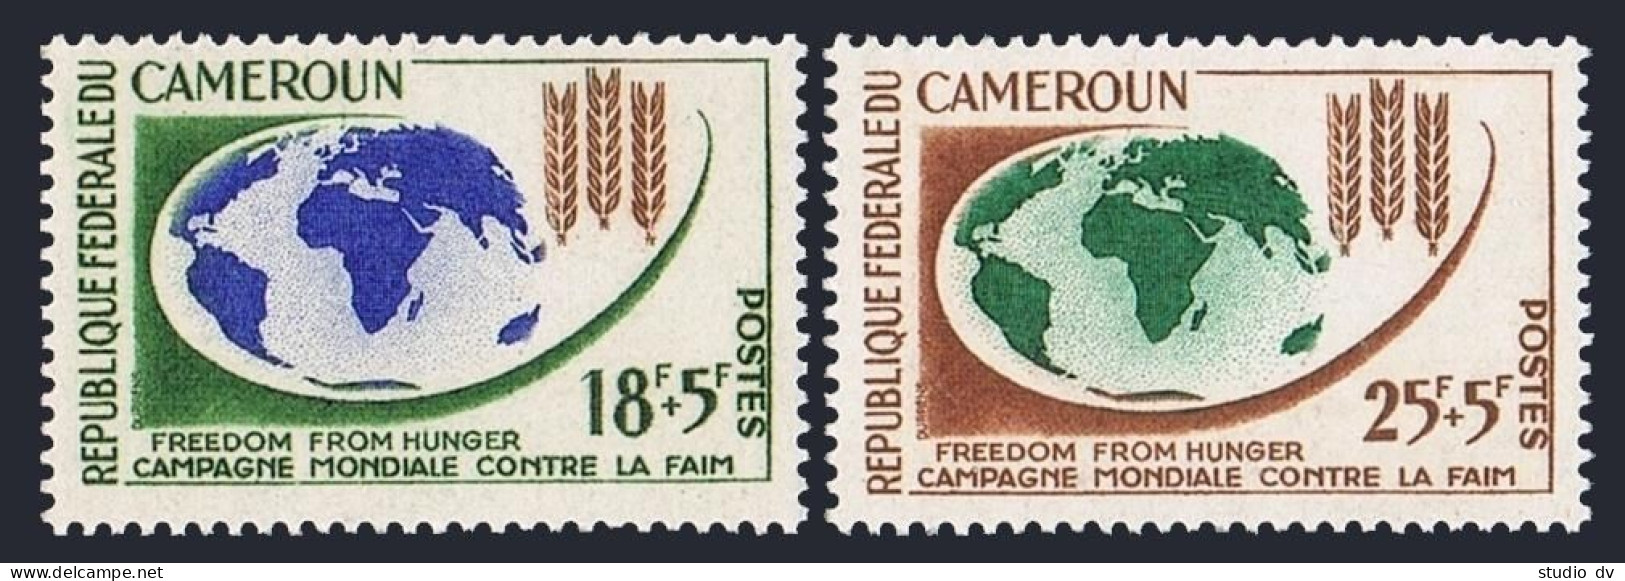 Cameroun B37-B38, MNH. Michel 386-387. FAO. Freedom From Hunger, 1963. Map. - Cameroun (1960-...)